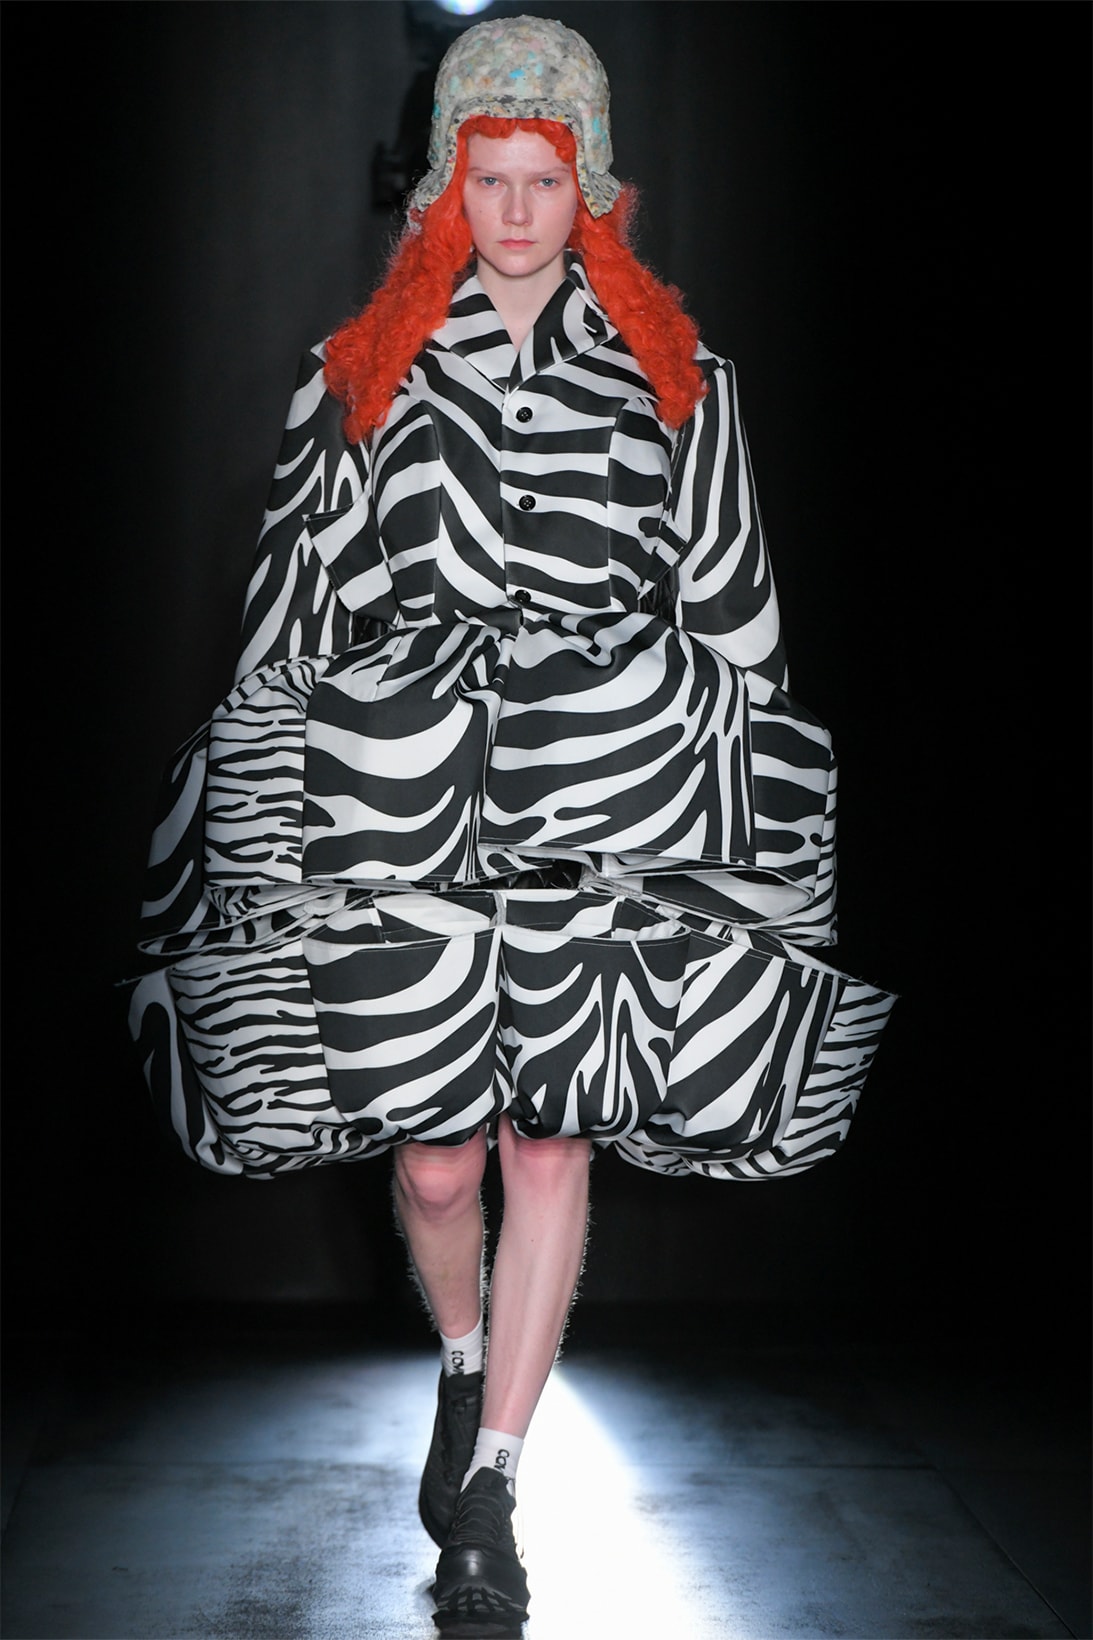 comme des garcons fall winter collection salomon pulsar platform tokyo runway show zebra print dress linen headpiece